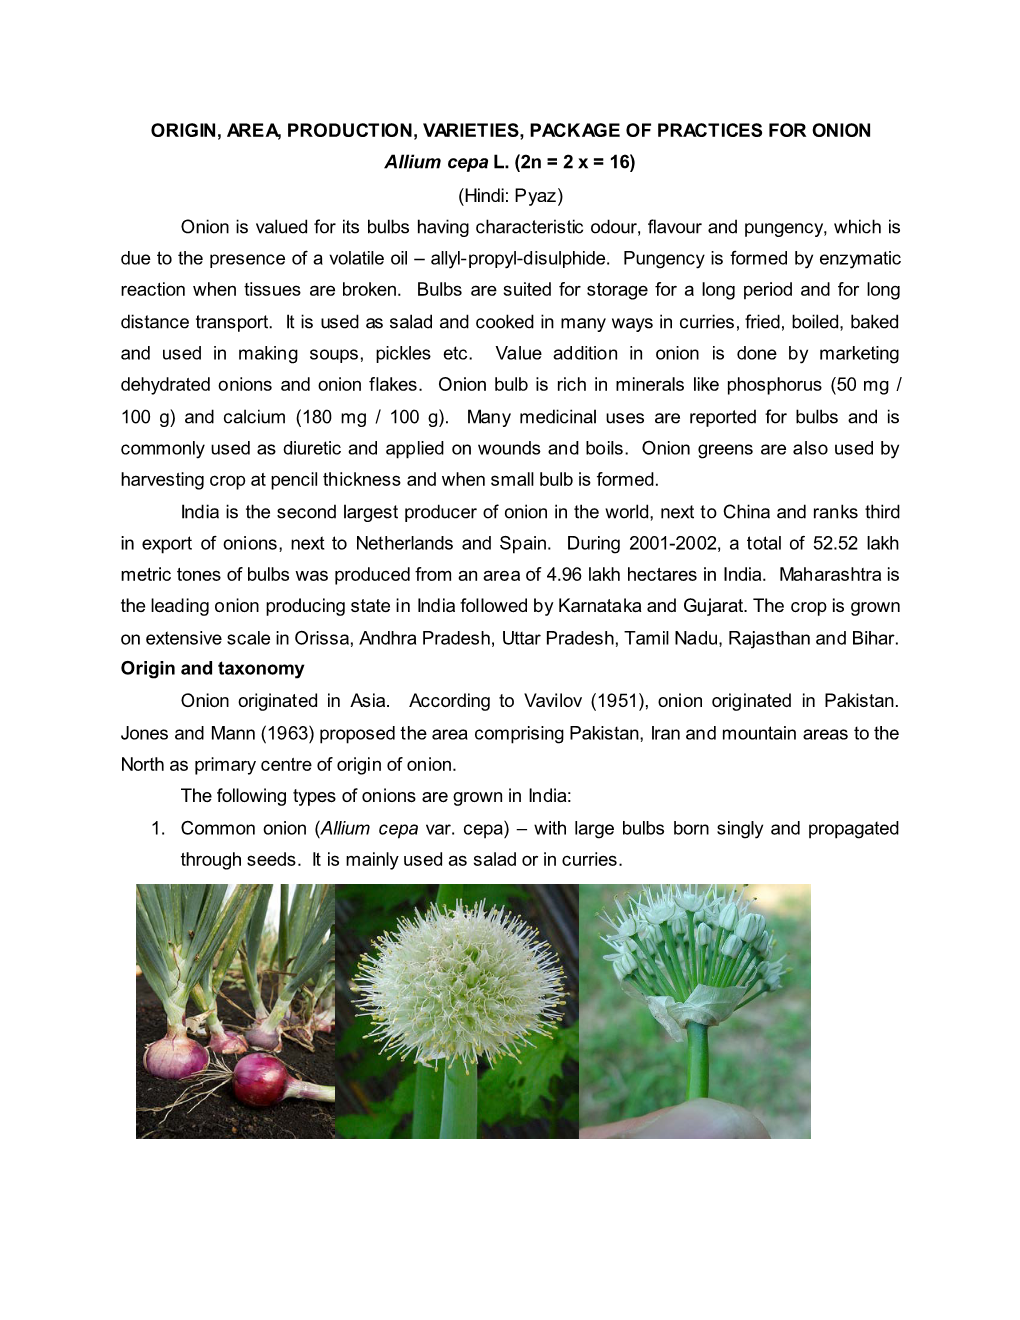 ORIGIN, AREA, PRODUCTION, VARIETIES, PACKAGE of PRACTICES for ONION Allium Cepa L